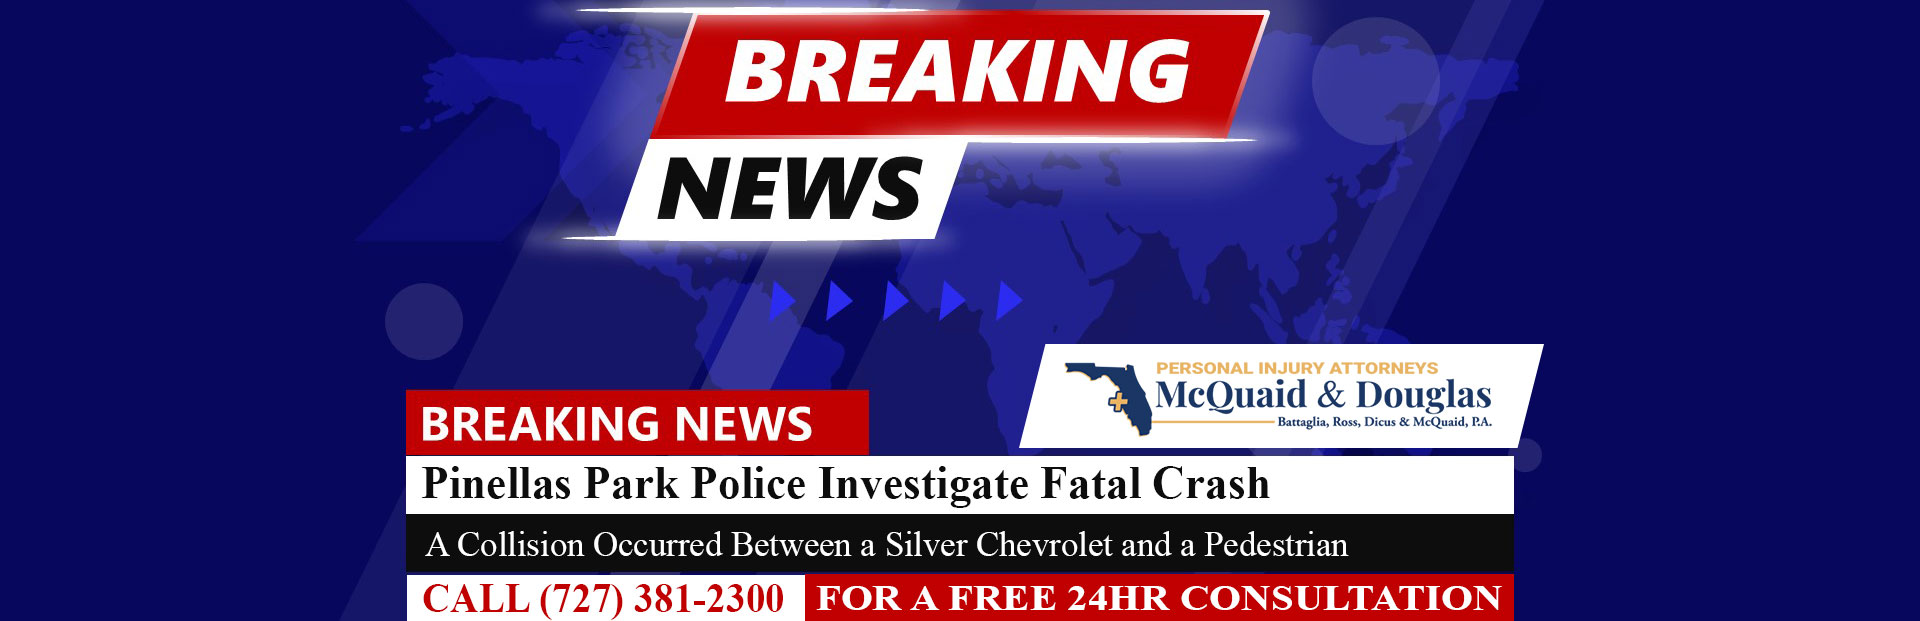 [10-05-23] Pinellas Park Police Investigate Fatal Crash Involving a Pedestrian